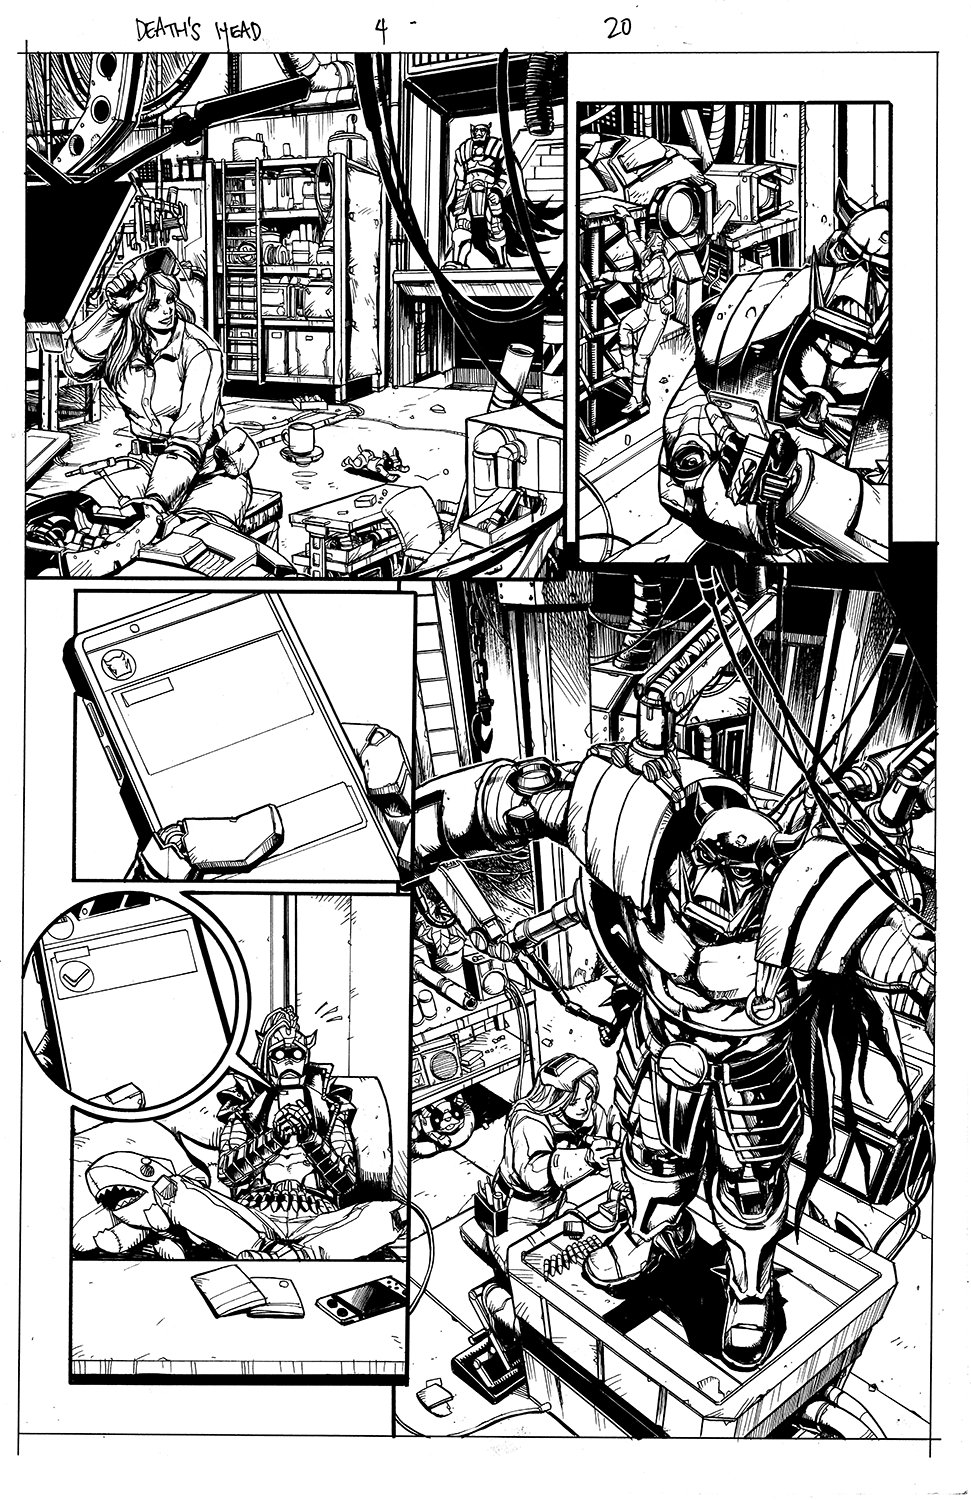 Death's Head #4 Page 20